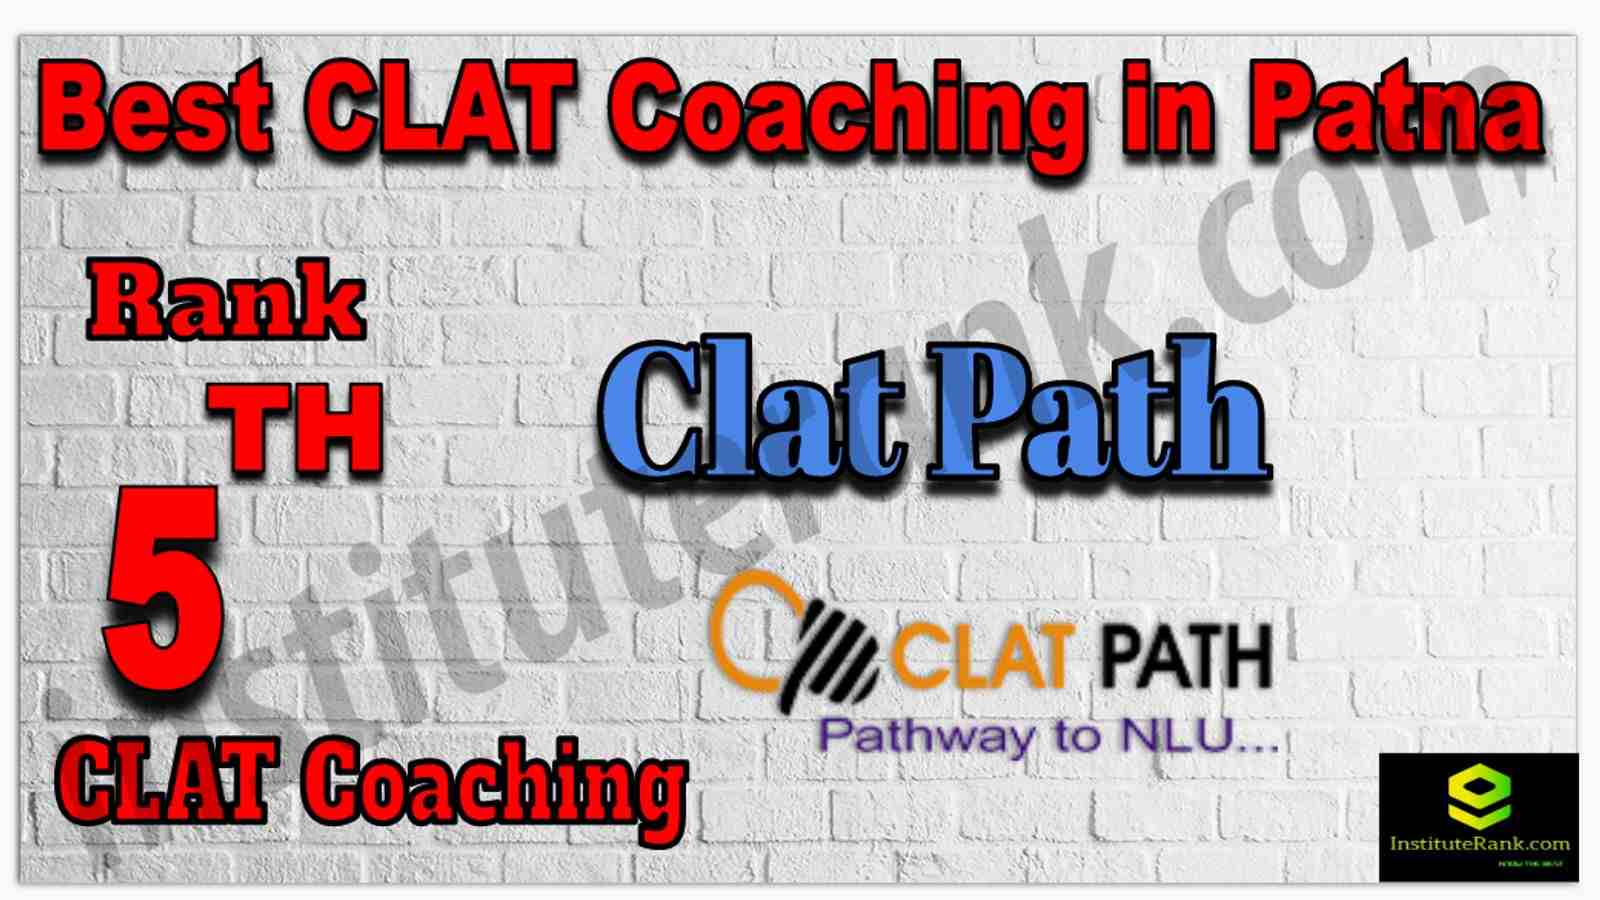 Rank 5th Best CLAT Coaching in Patna